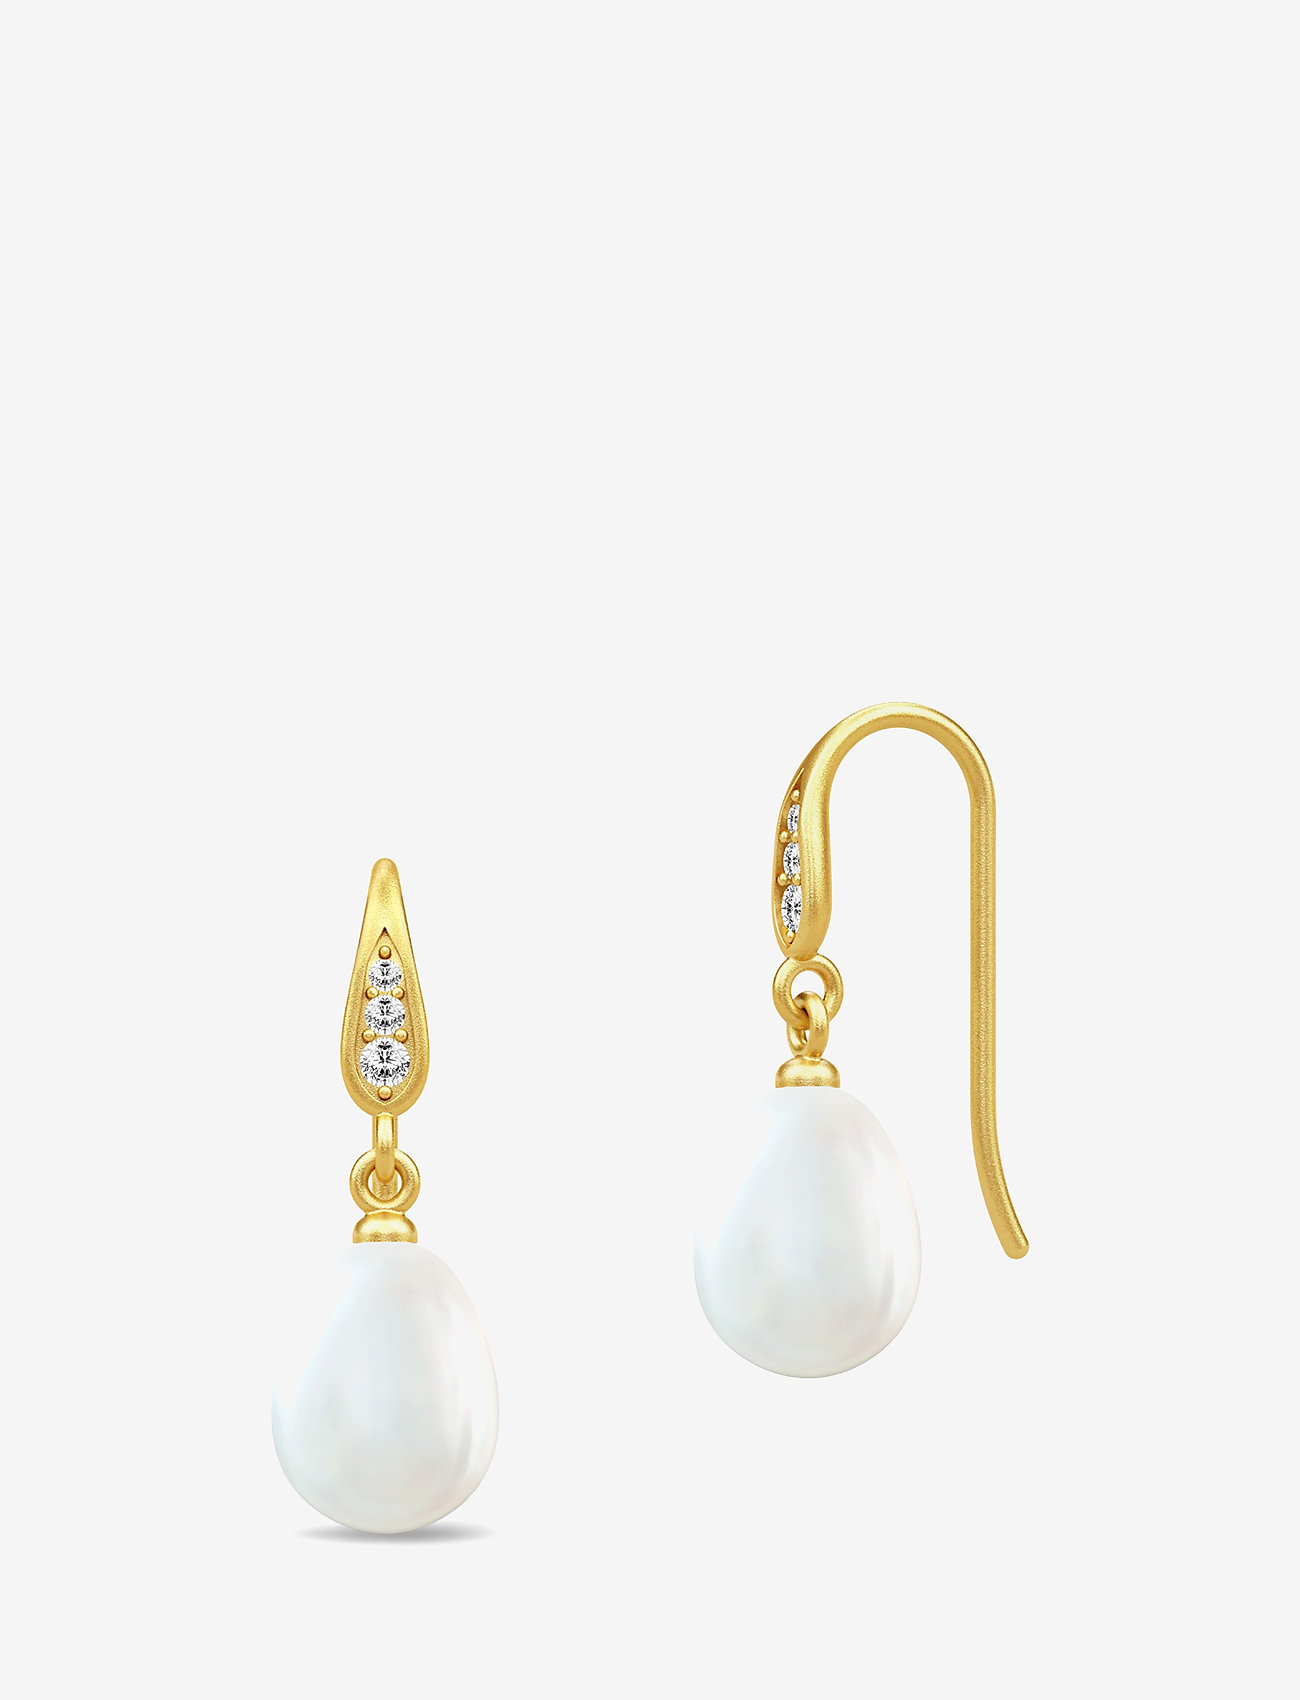 Lege med gambling bruser Julie Sandlau Ocean Earrings - Gold/white - Vedhæng øreringe | Boozt.com